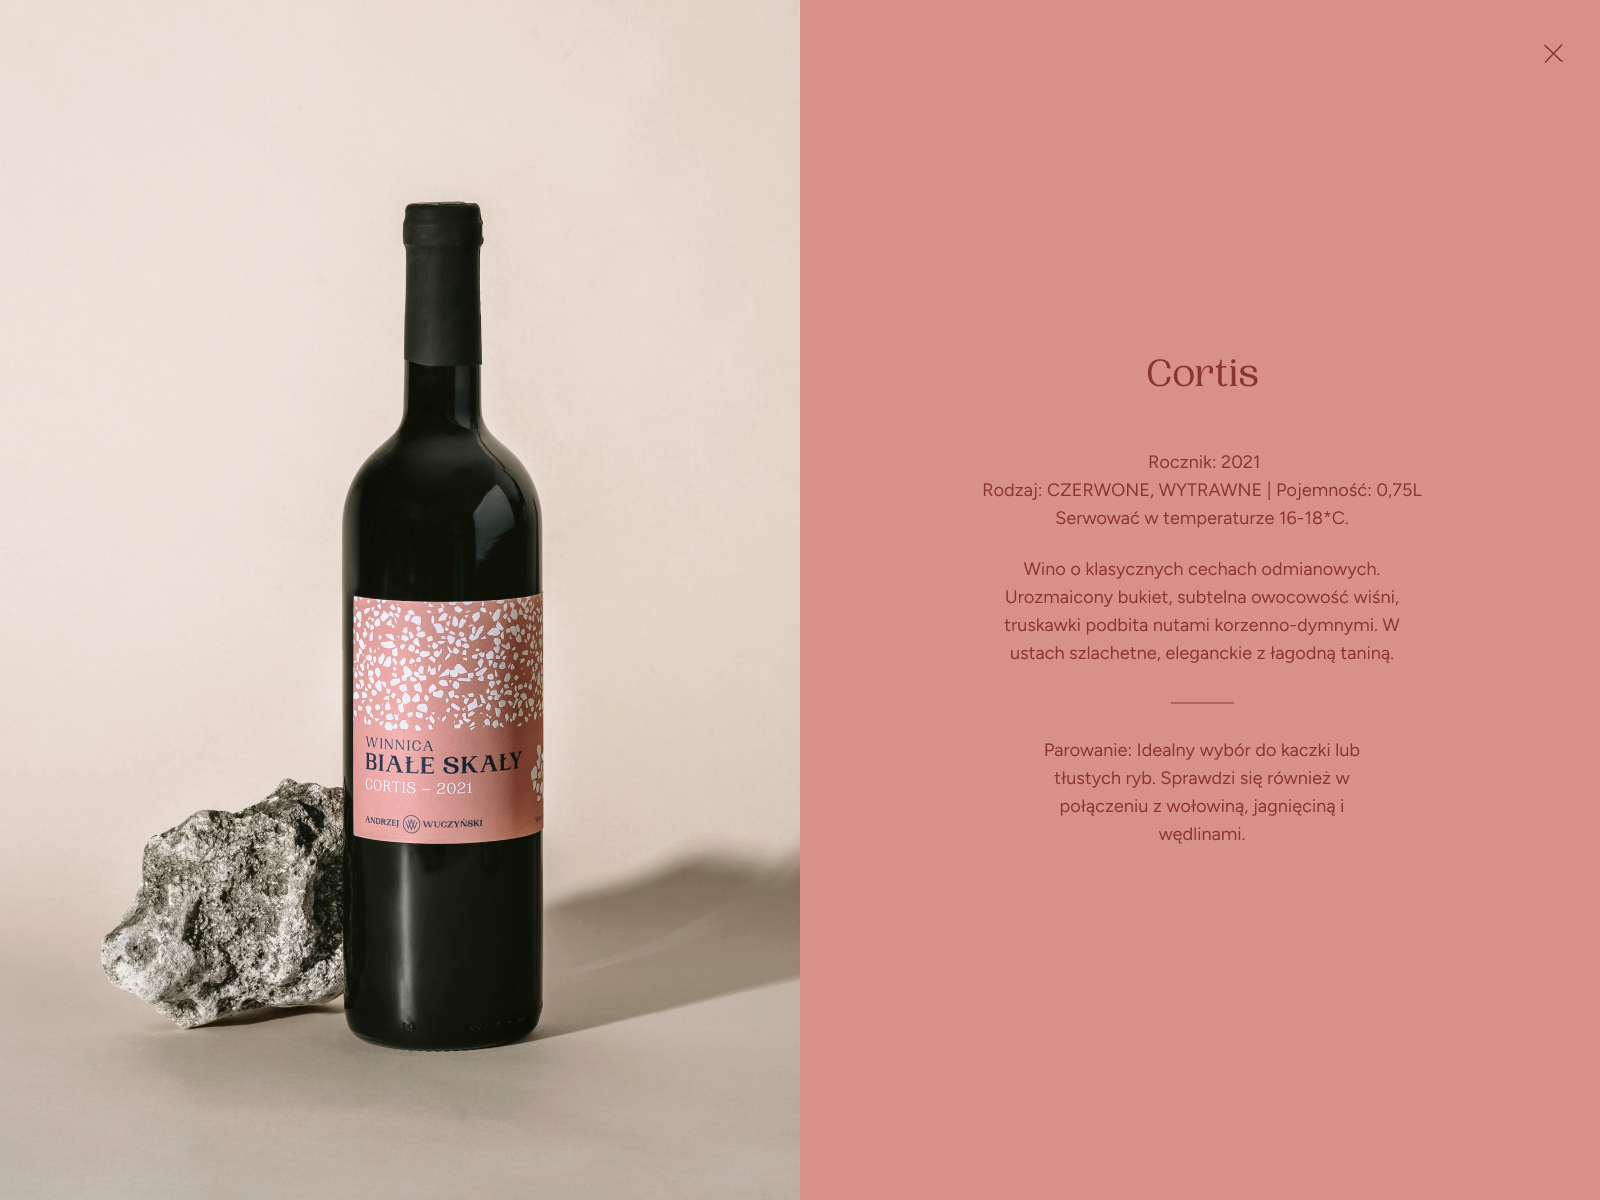 Vineyard | Our wines